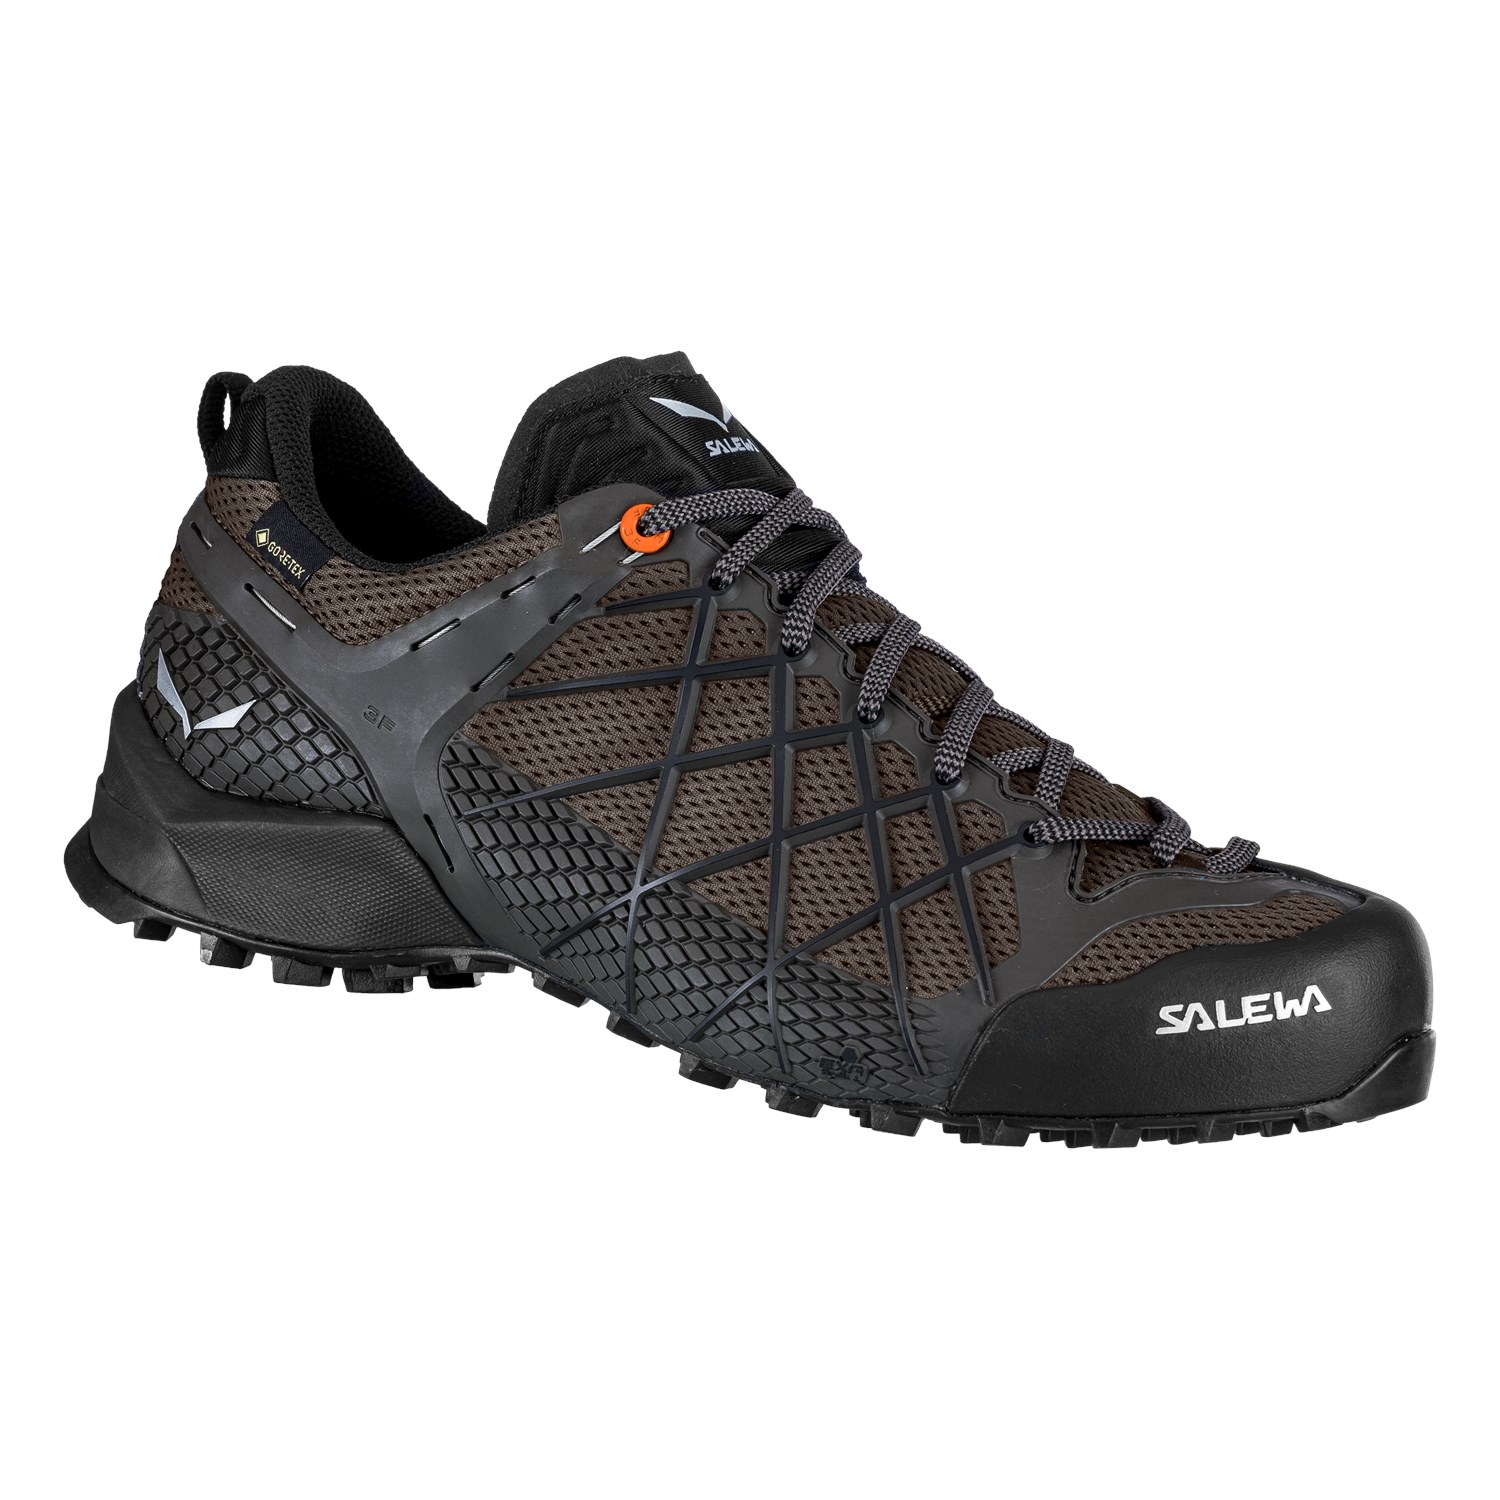 SALEWA Herren-Wander-Outdoor-Multisport-Schuhe MS Wildfire GORE-TEX® schwarz 